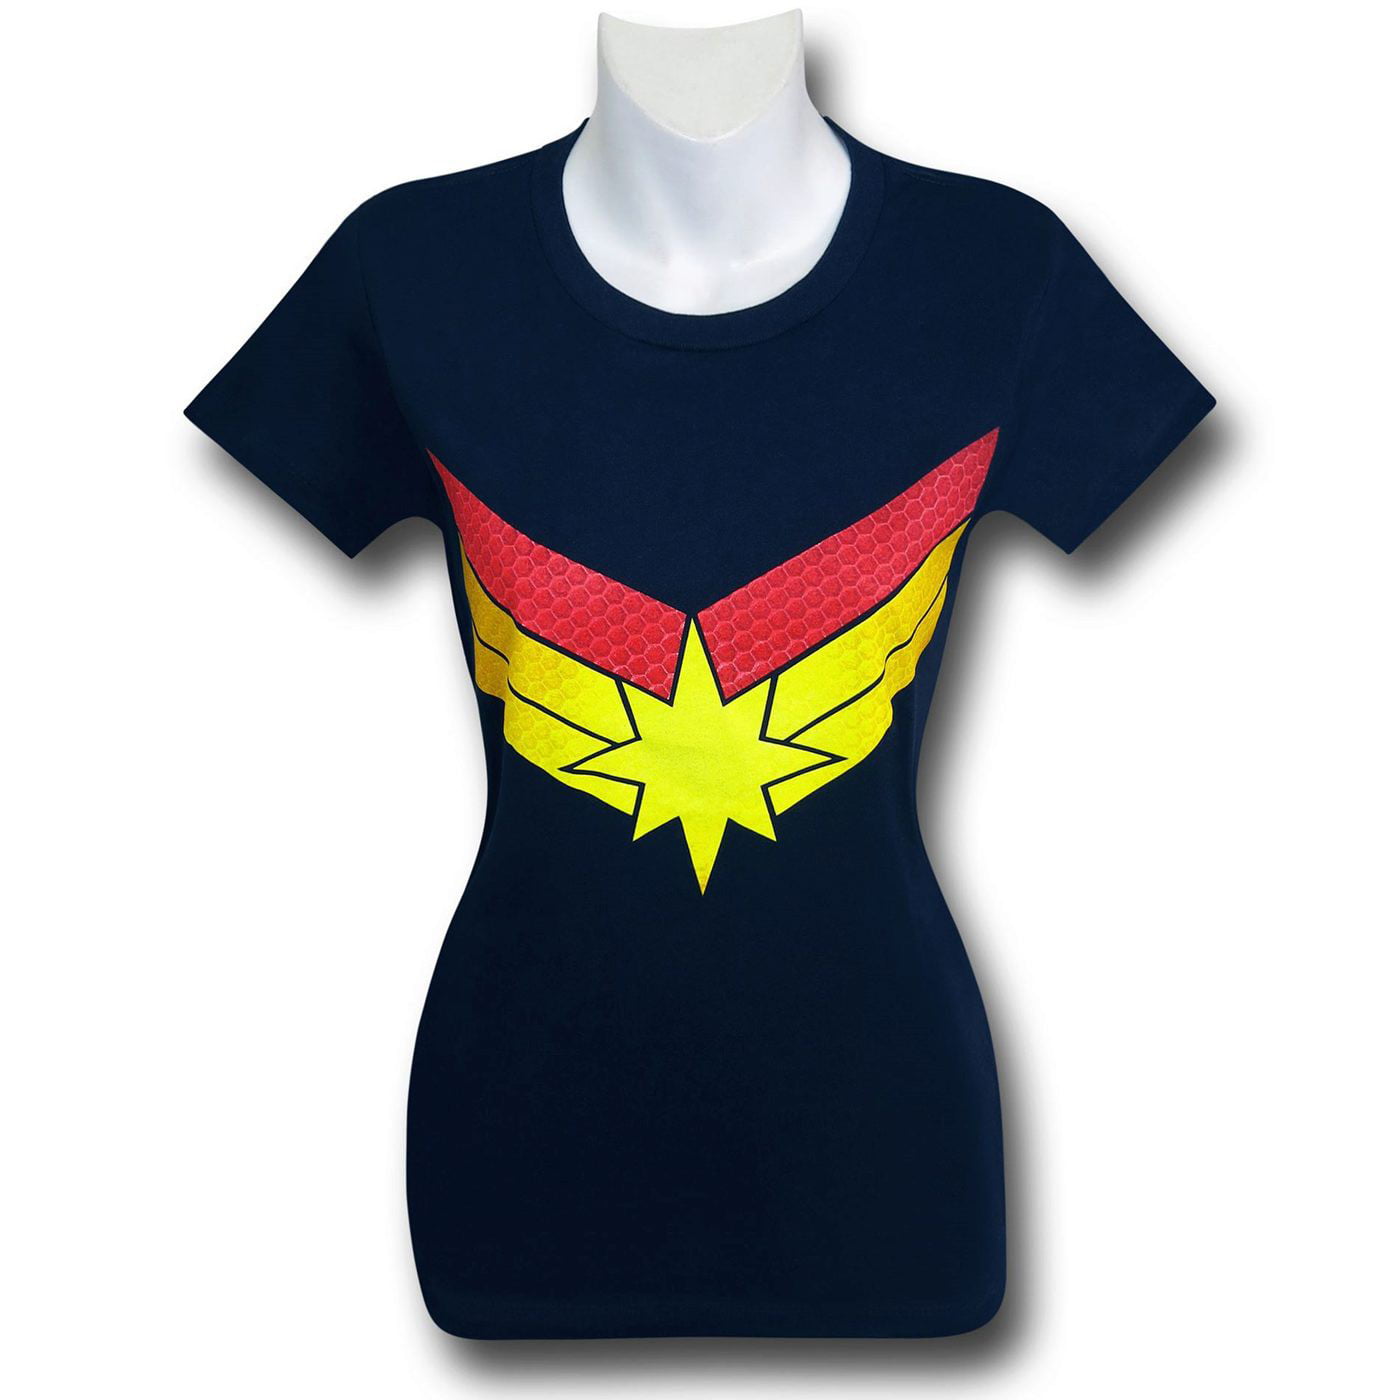 Tentative name the Internet Go back Captain Marvel Symbol Women's Fitted T-Shirt-2XLarge - Walmart.com